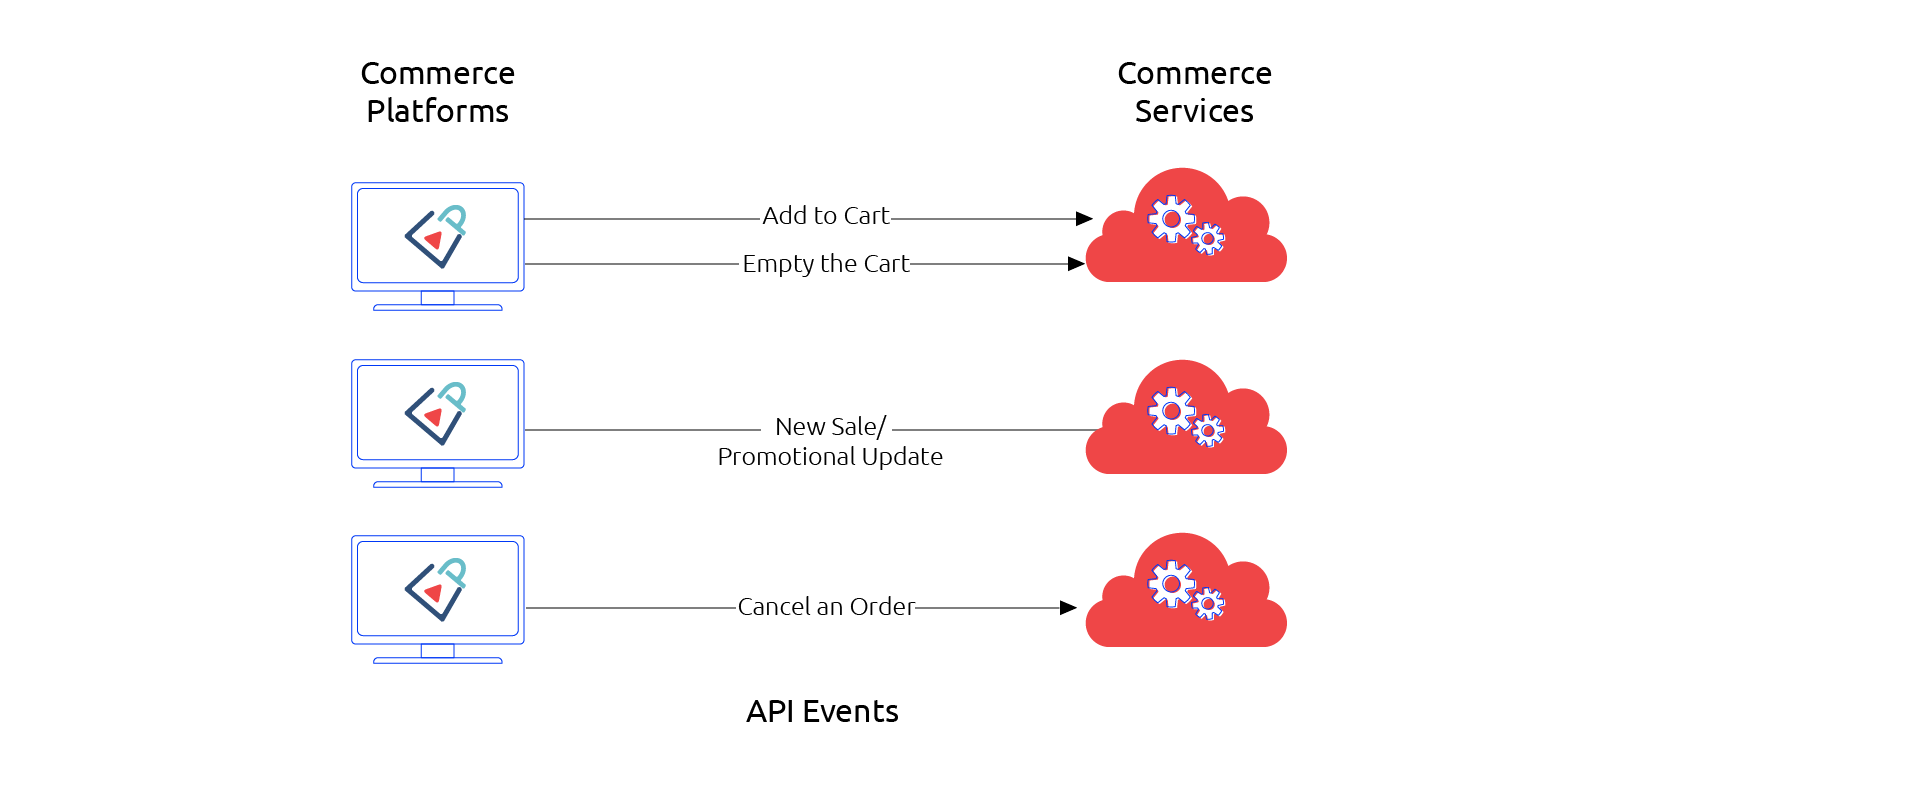 UpStart Commerce as a Service Diagram